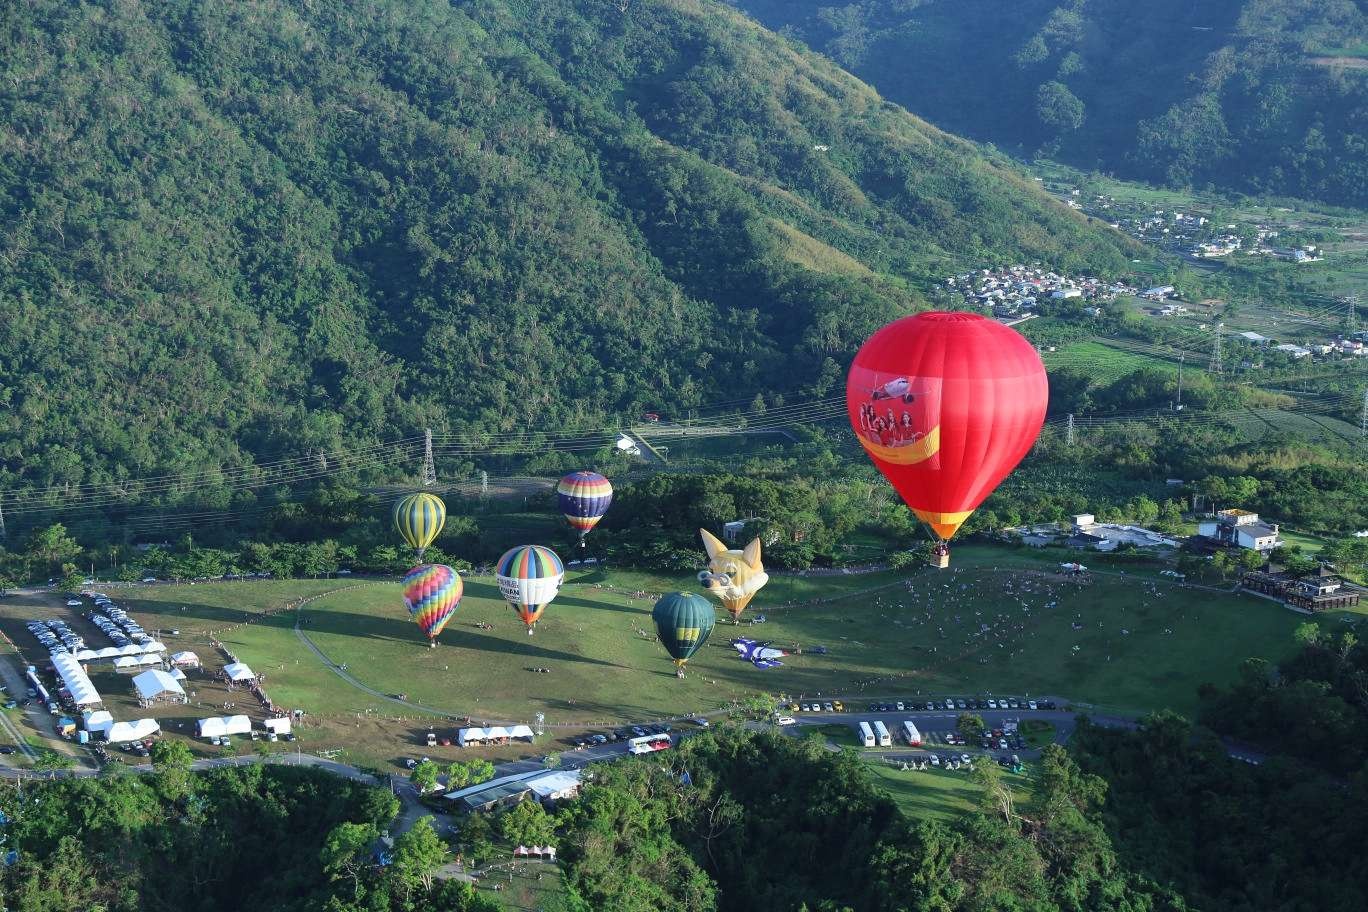 Tuyen Quang's first International Hot Air Balloon festival kicks off tourism year